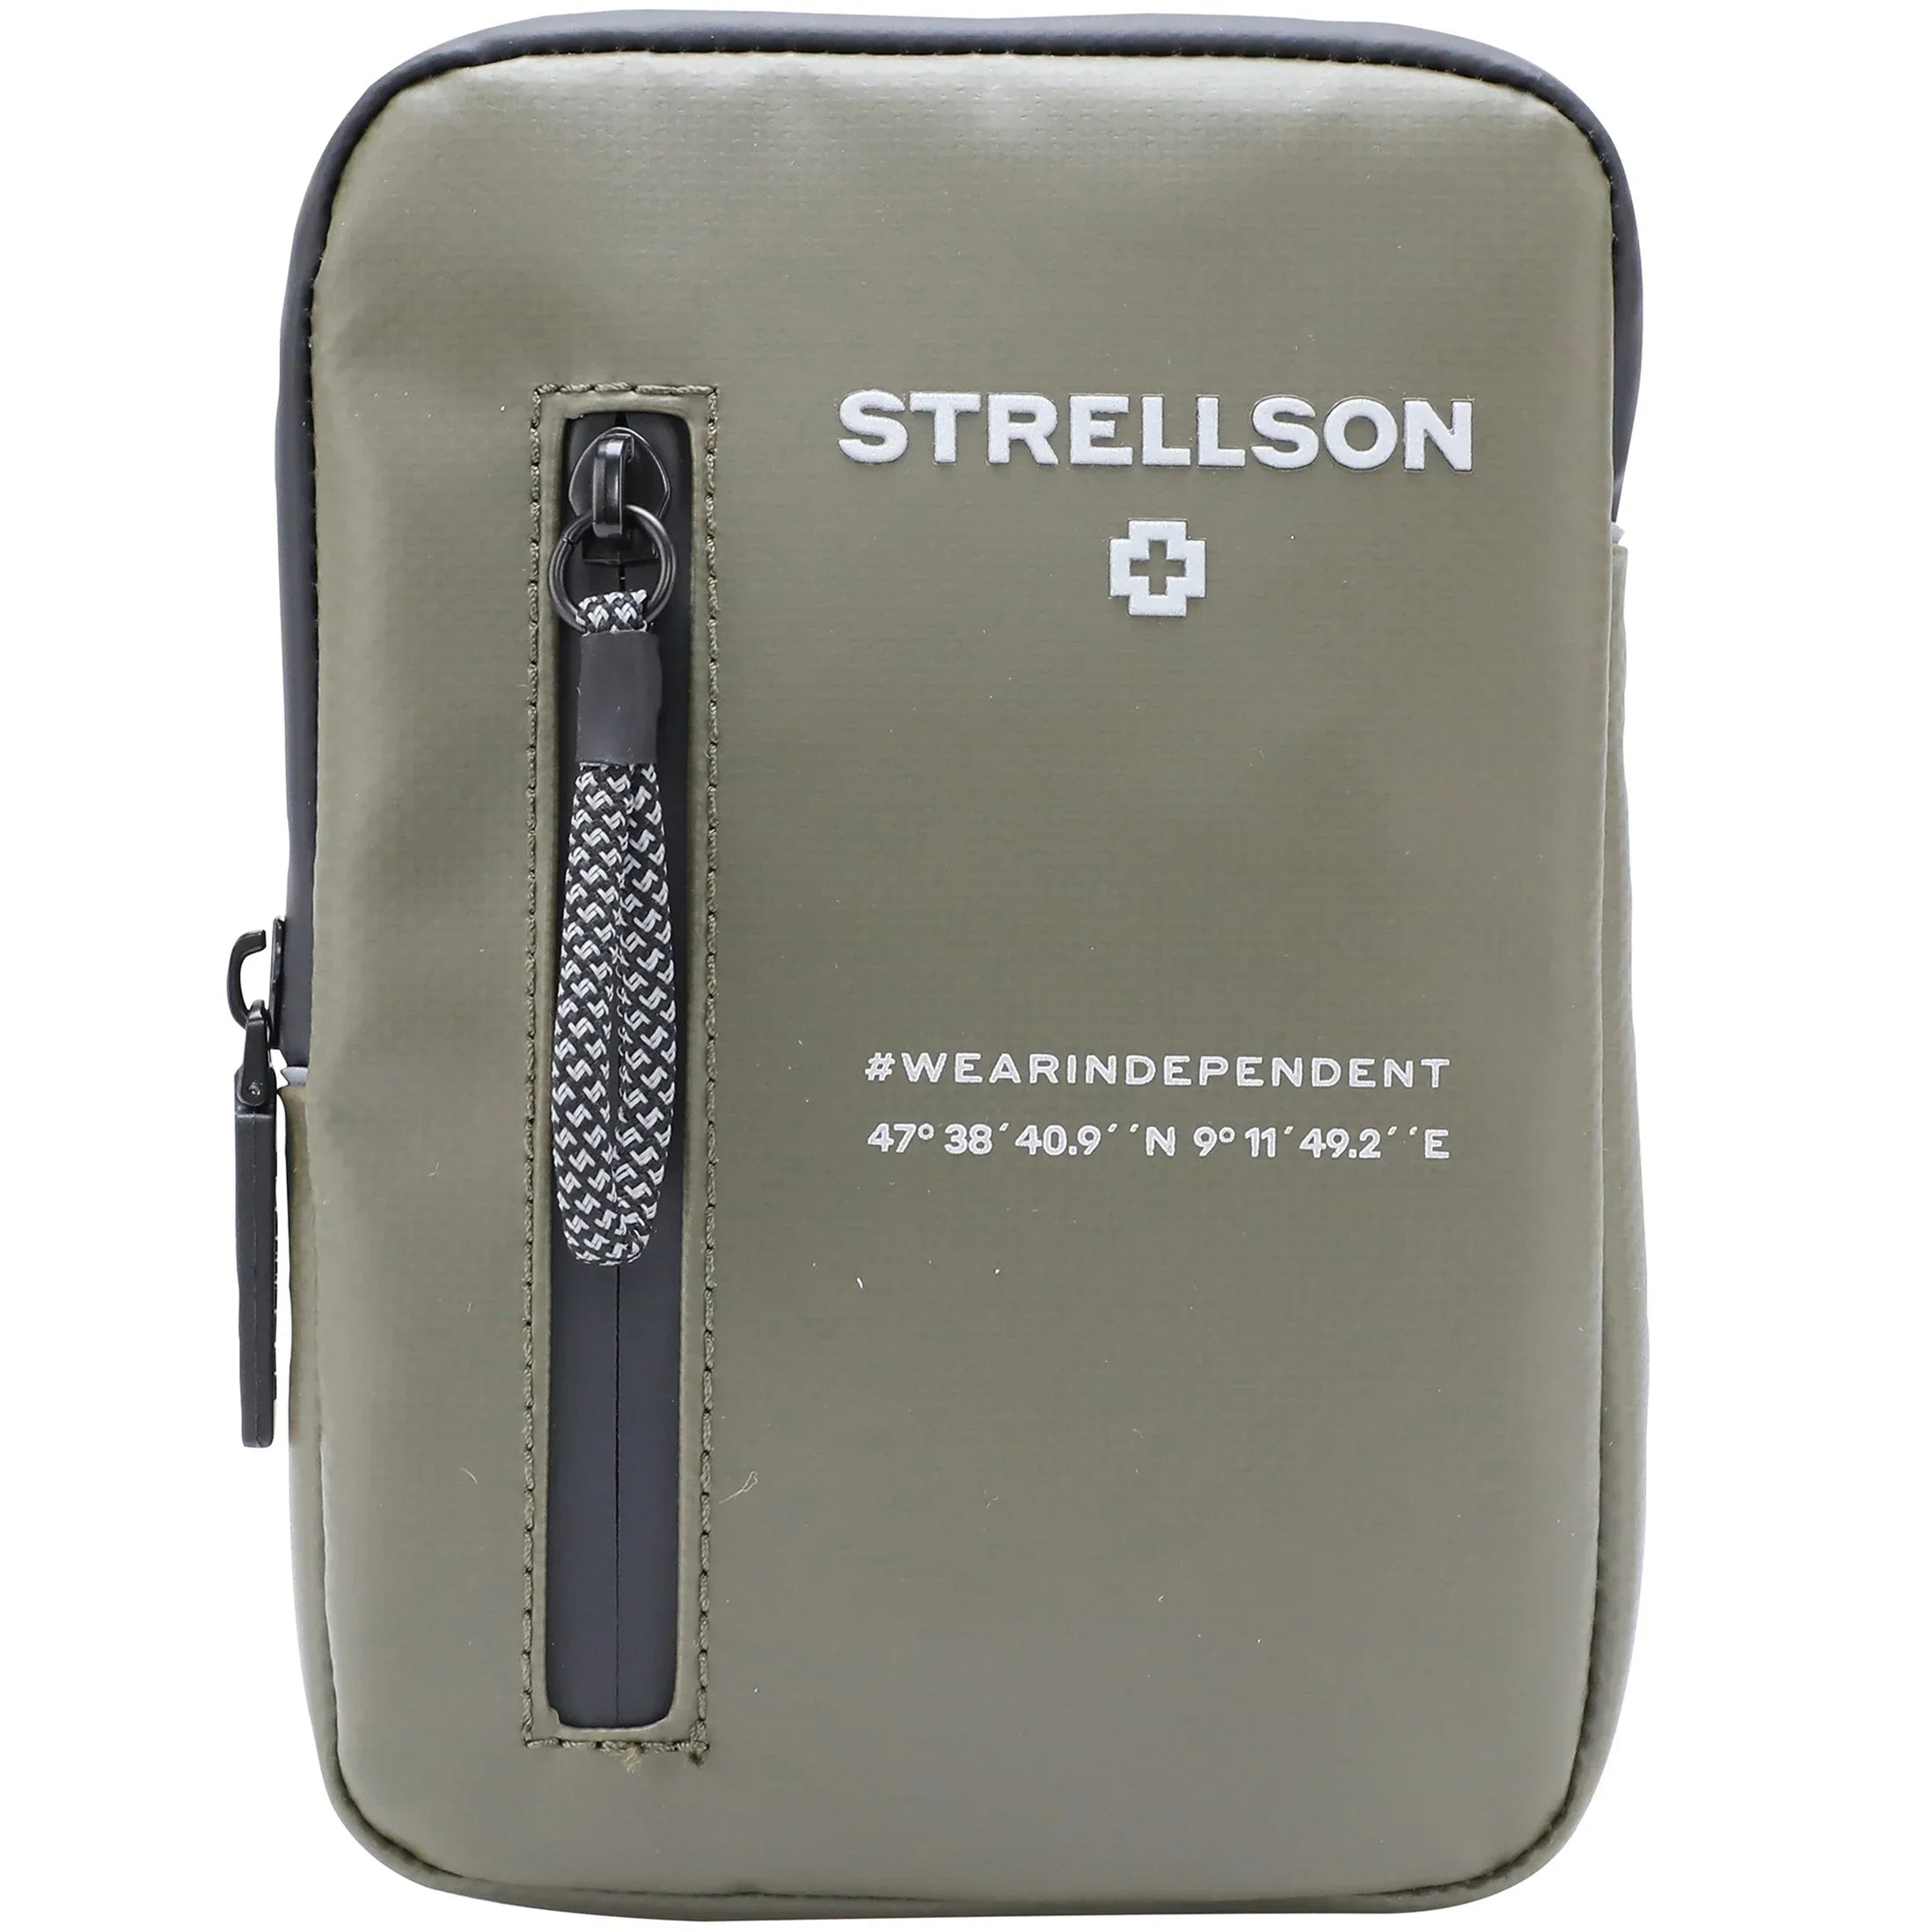 Strellson Stockwell 2.0 Shoulderbag XSVZ 19 cm - Orange